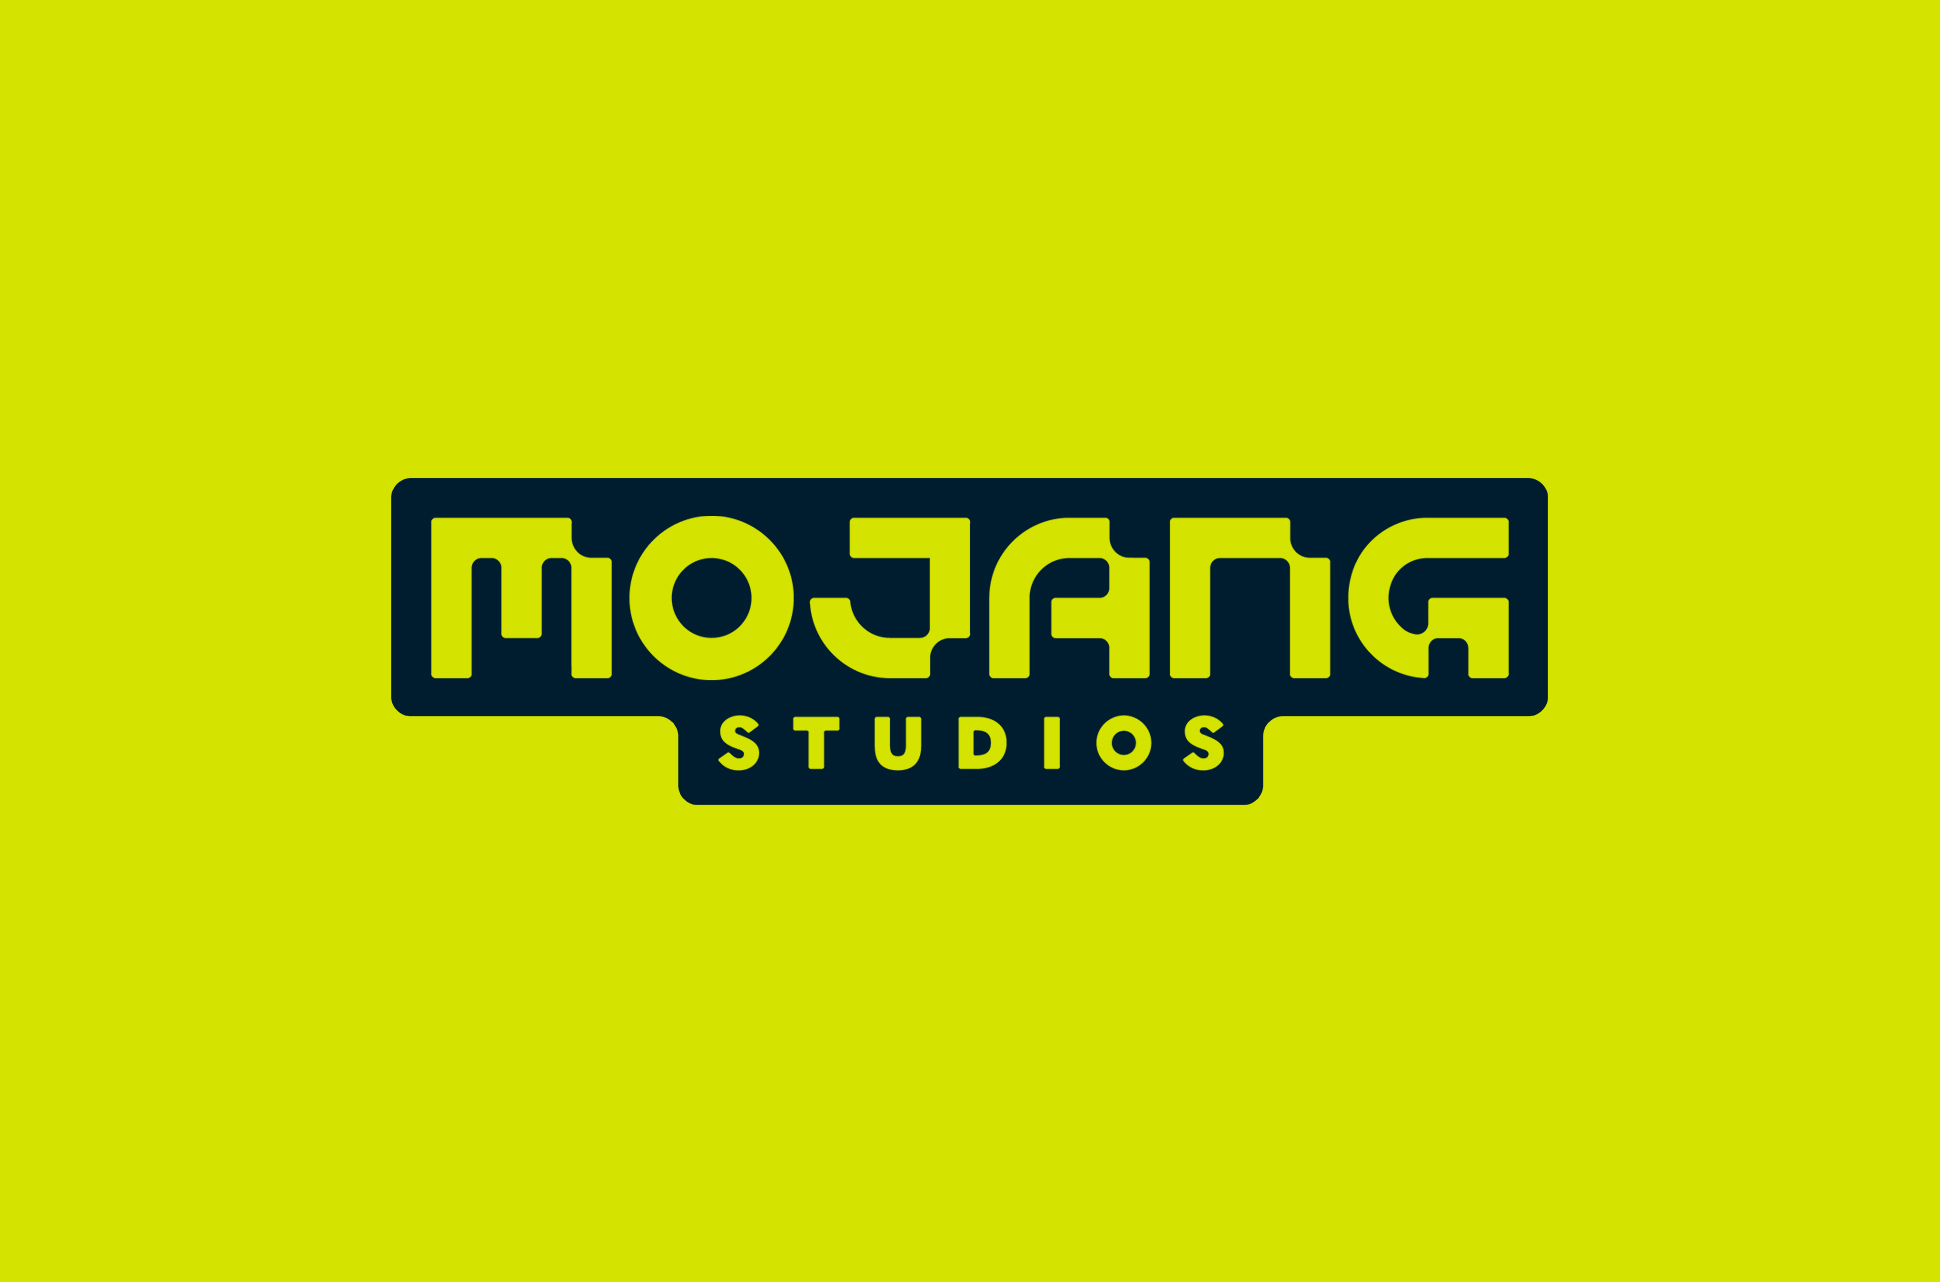 Mojang Studios logo.